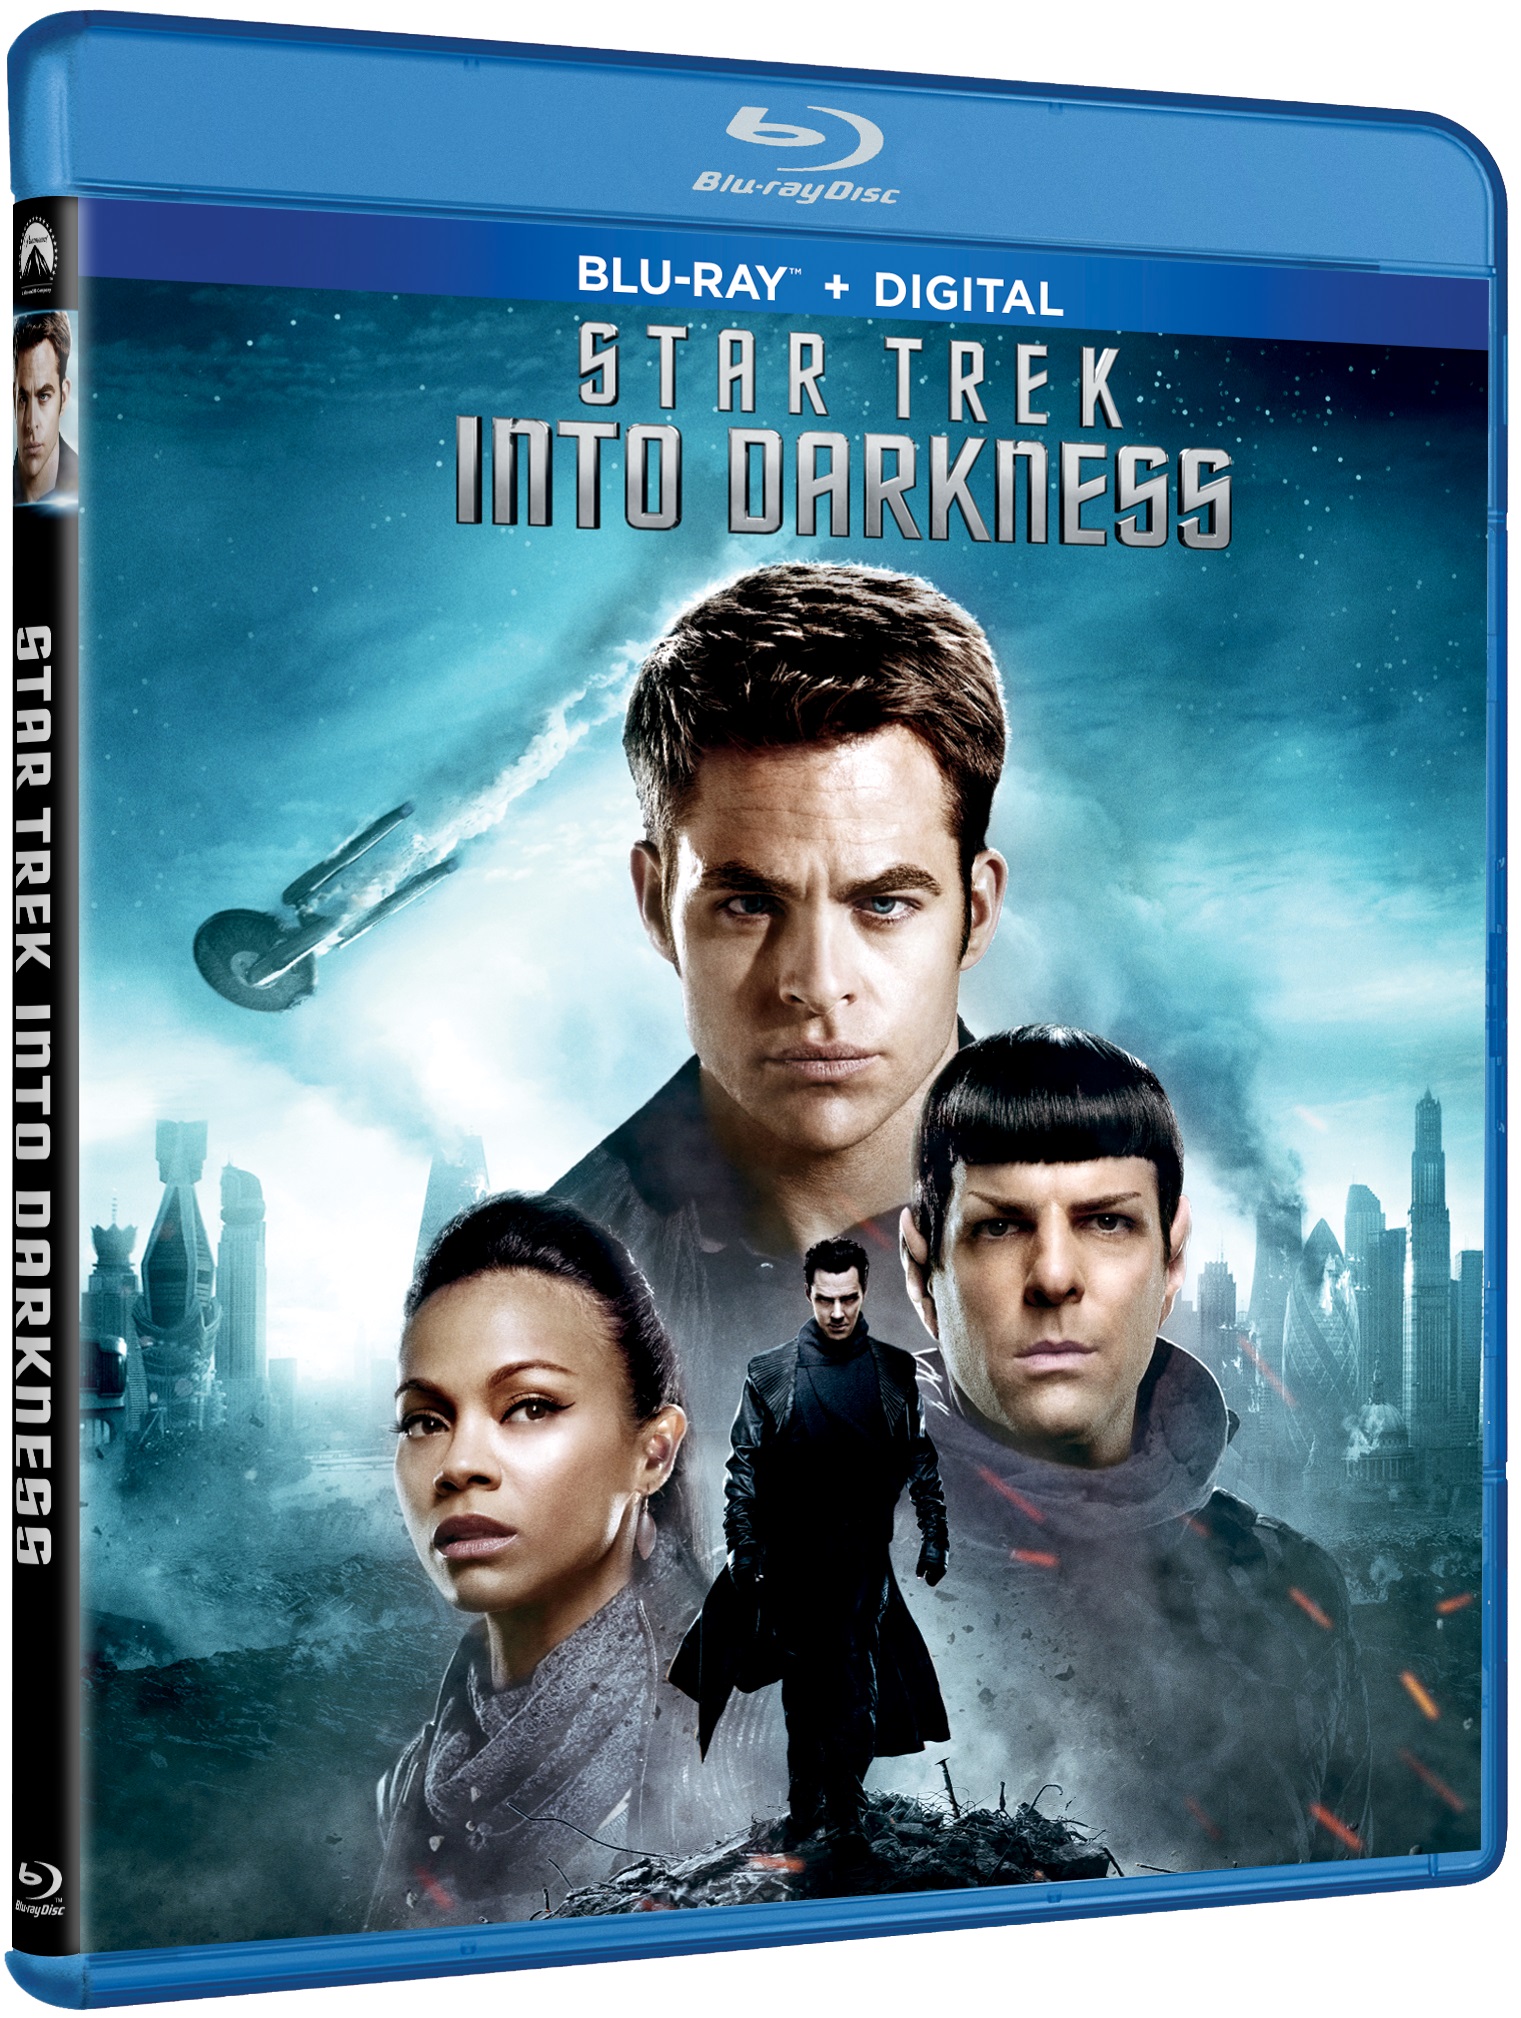 Star Trek Into Darkness [Includes Digital Copy] [Blu-ray] [2013]